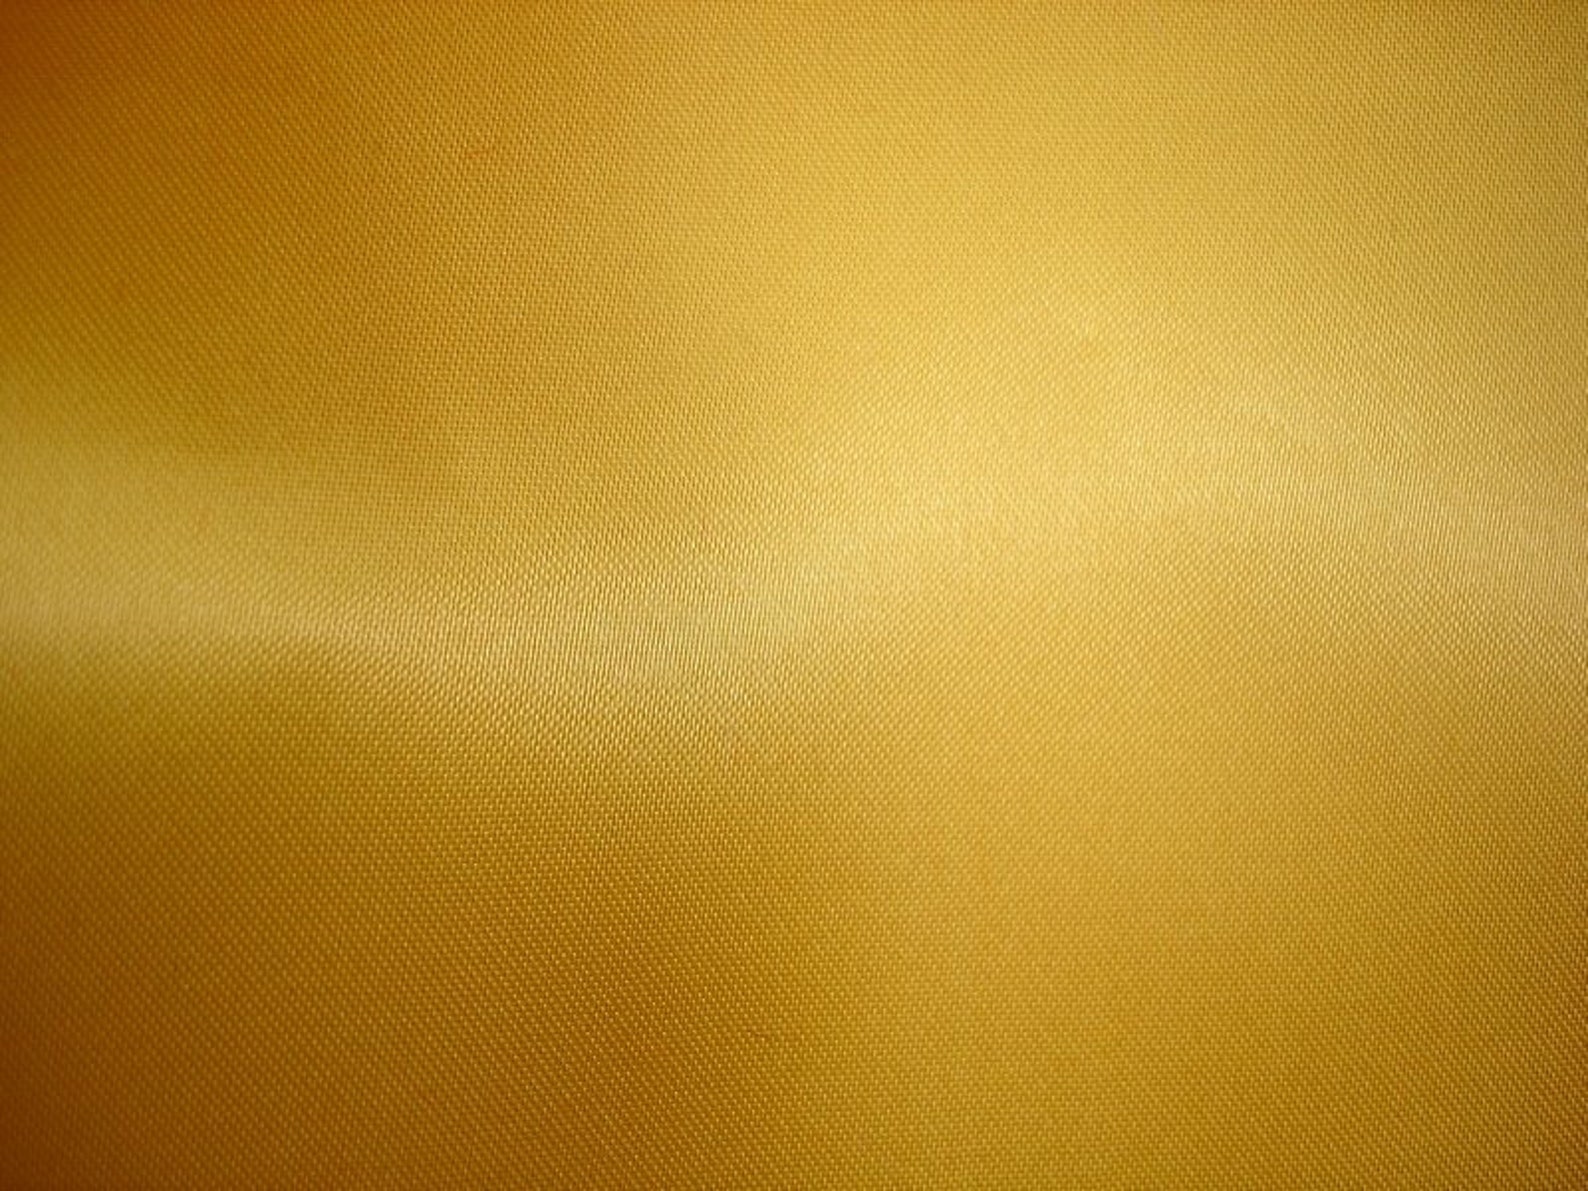 Золотой цвет кожи. Золото металлик lx19240. Золото текстура. Золото цвет. Золотой фон.